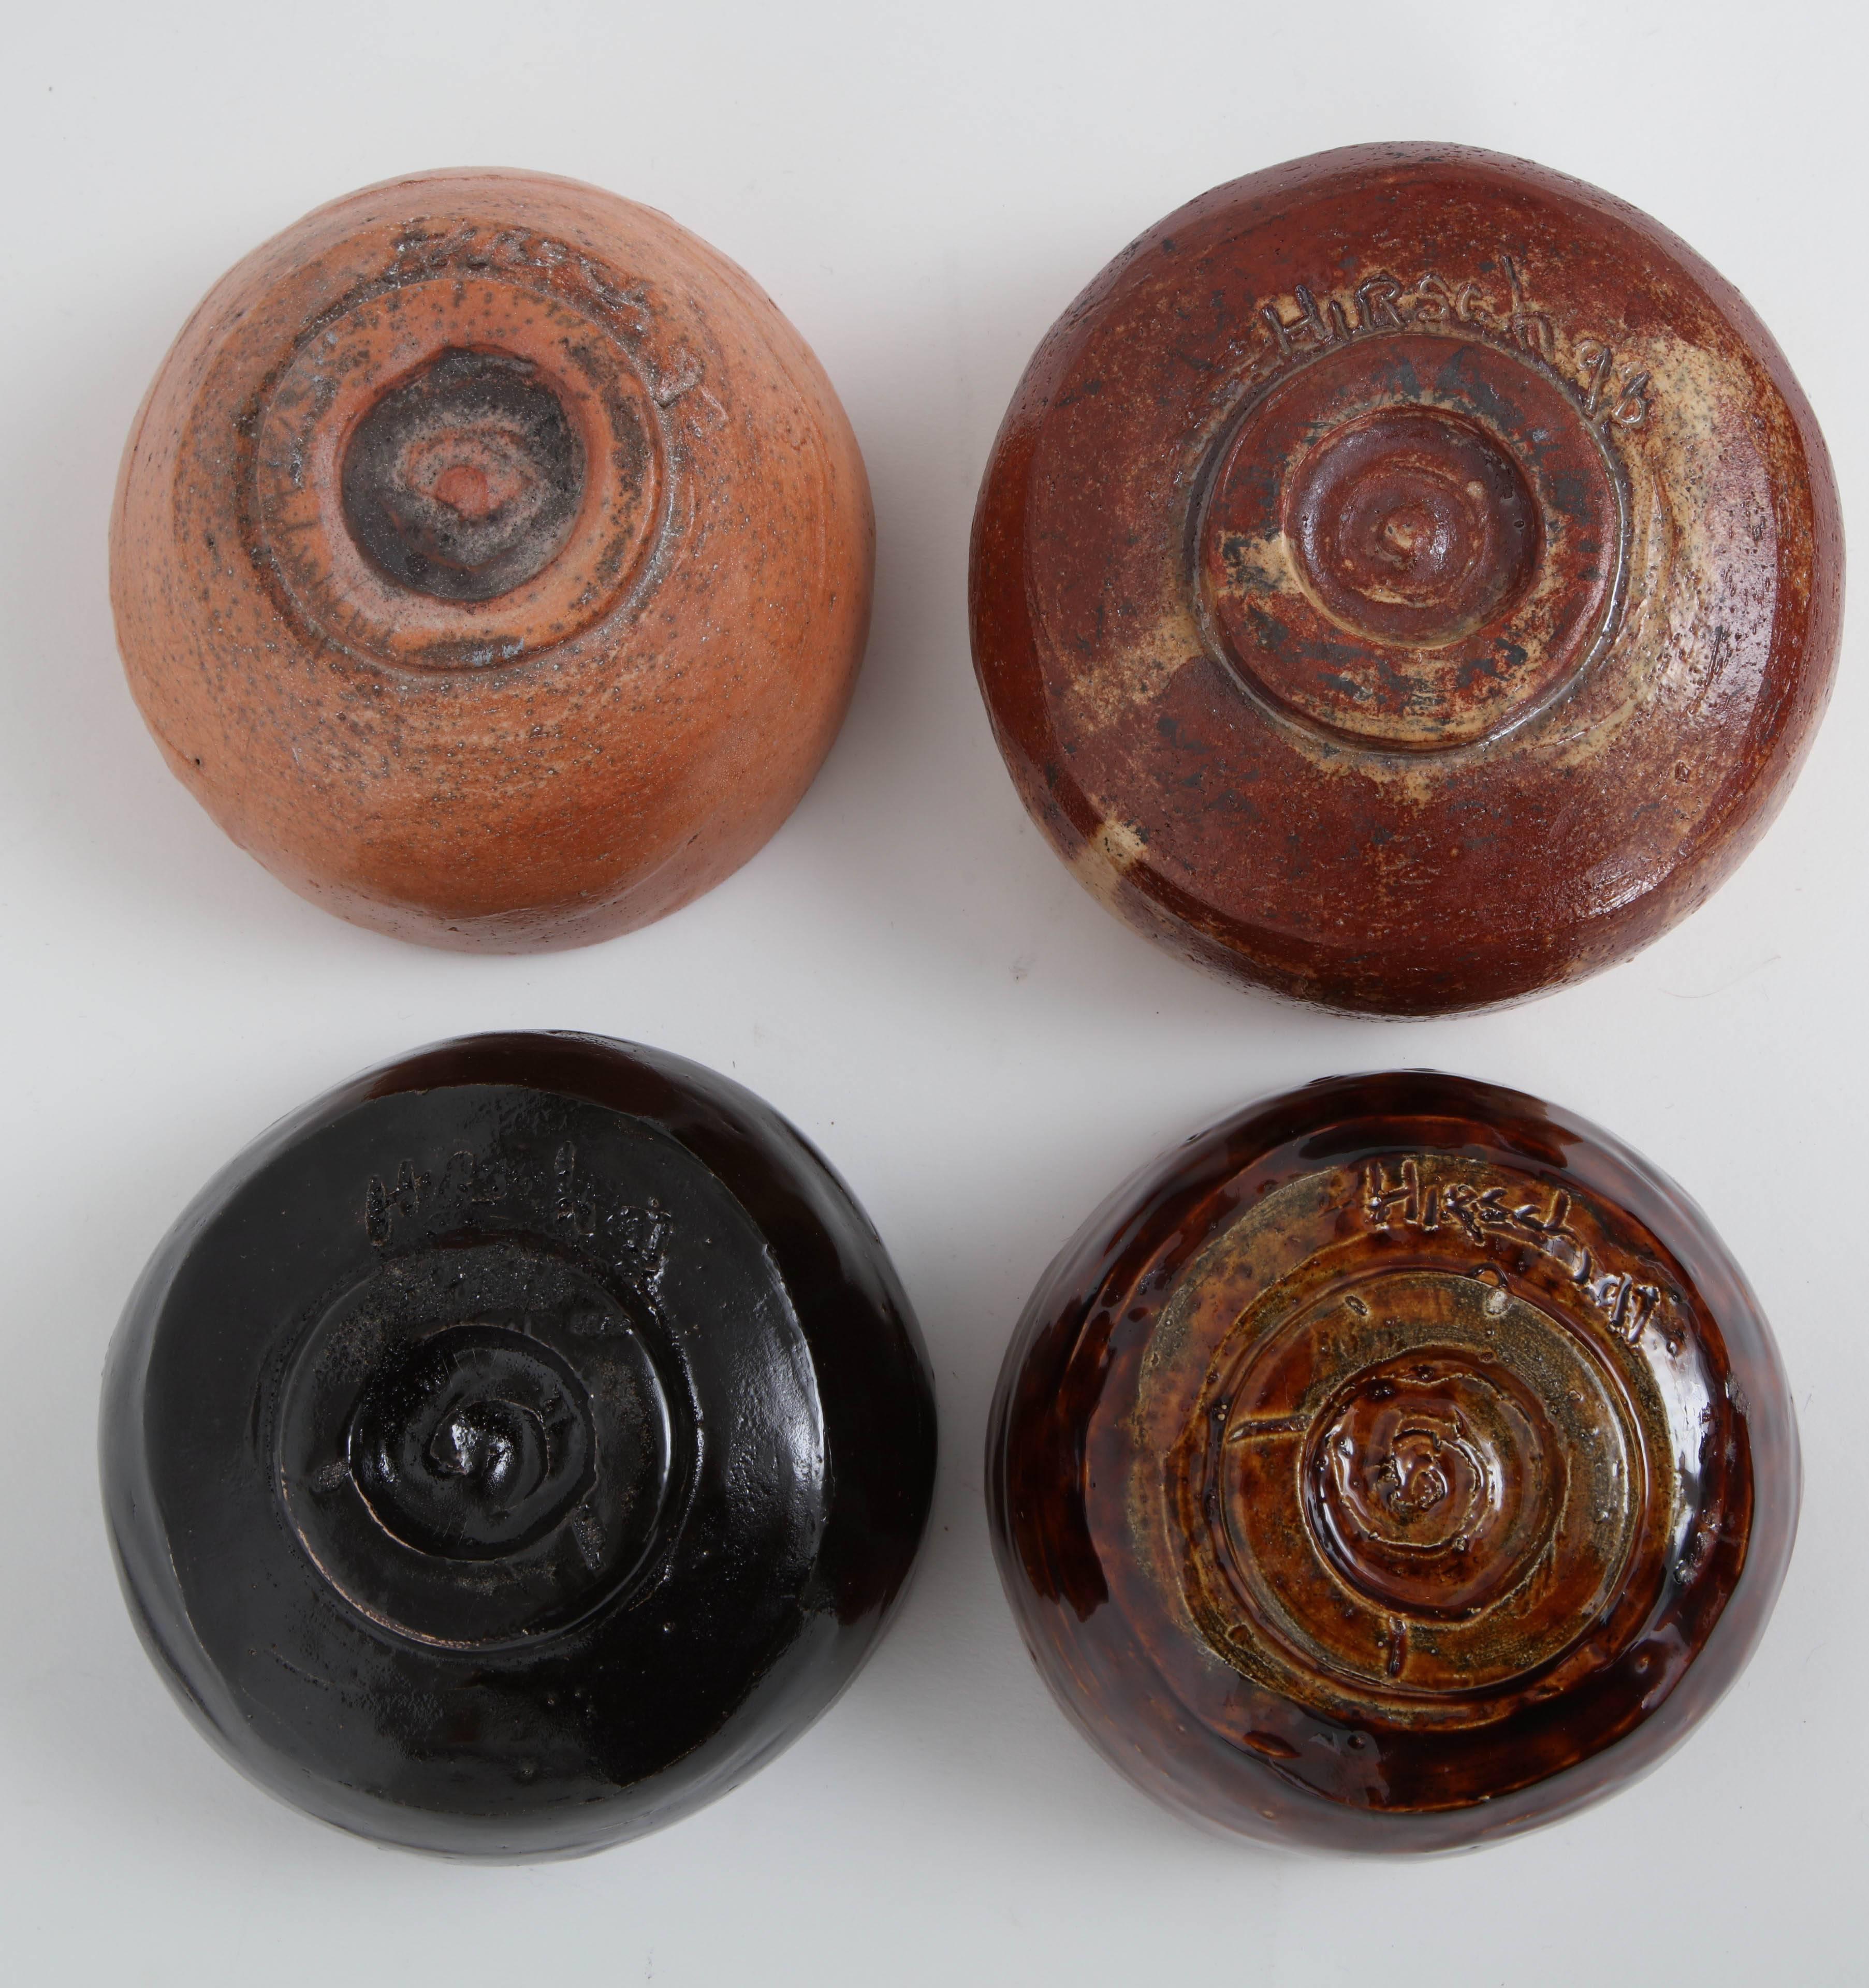 20th Century Richard Hirsch's Set of 4 Raku Tea Bowls, 1996 - 1997 For Sale